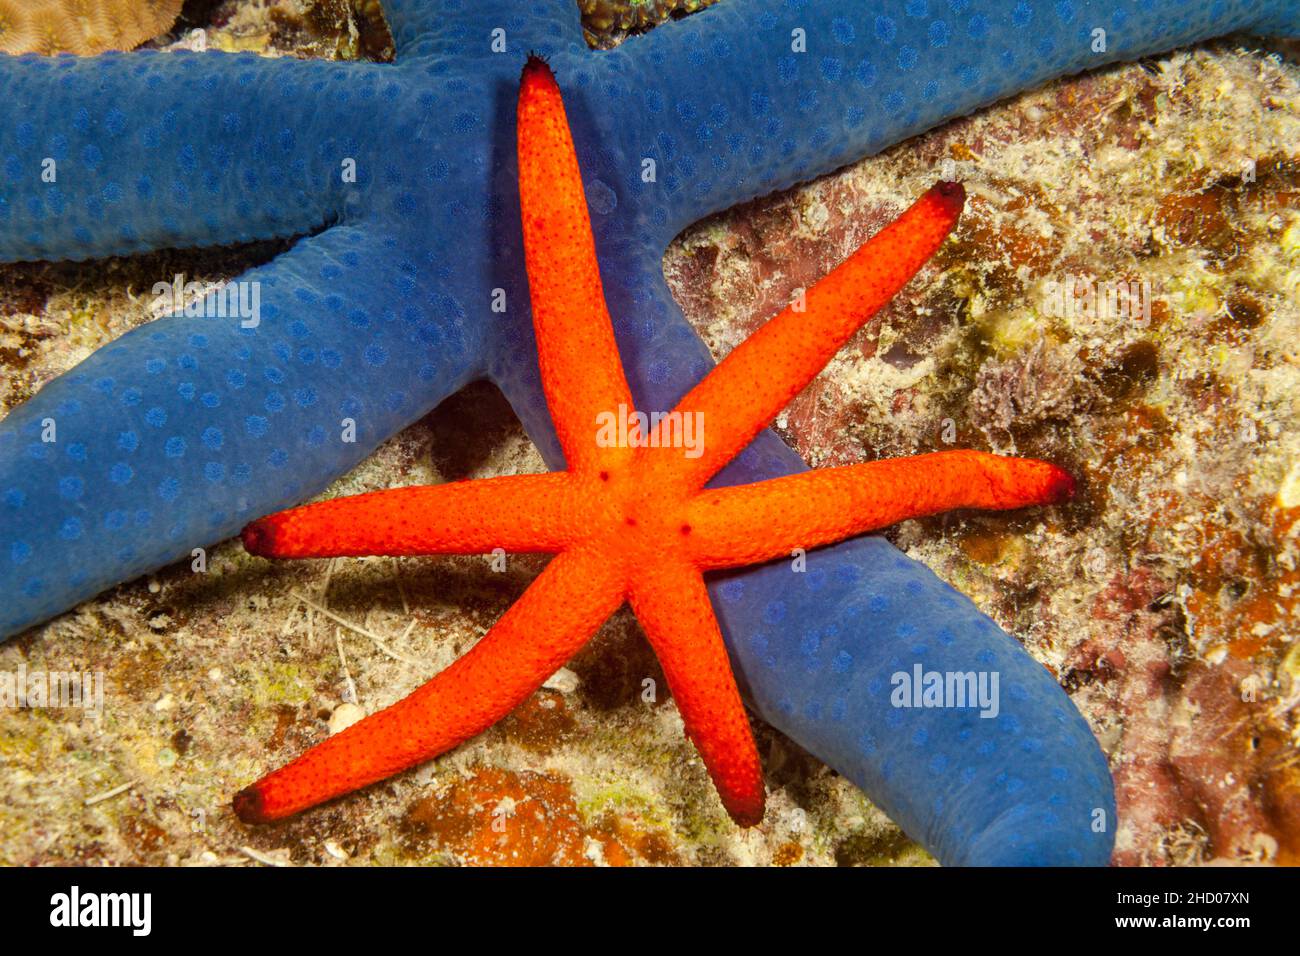 A blue seastar - starfish, Linckia laevigata, and an orange Luzon sea star, Echinaster luzonicus, off Vanua Levu Island, Fiji. Stock Photo